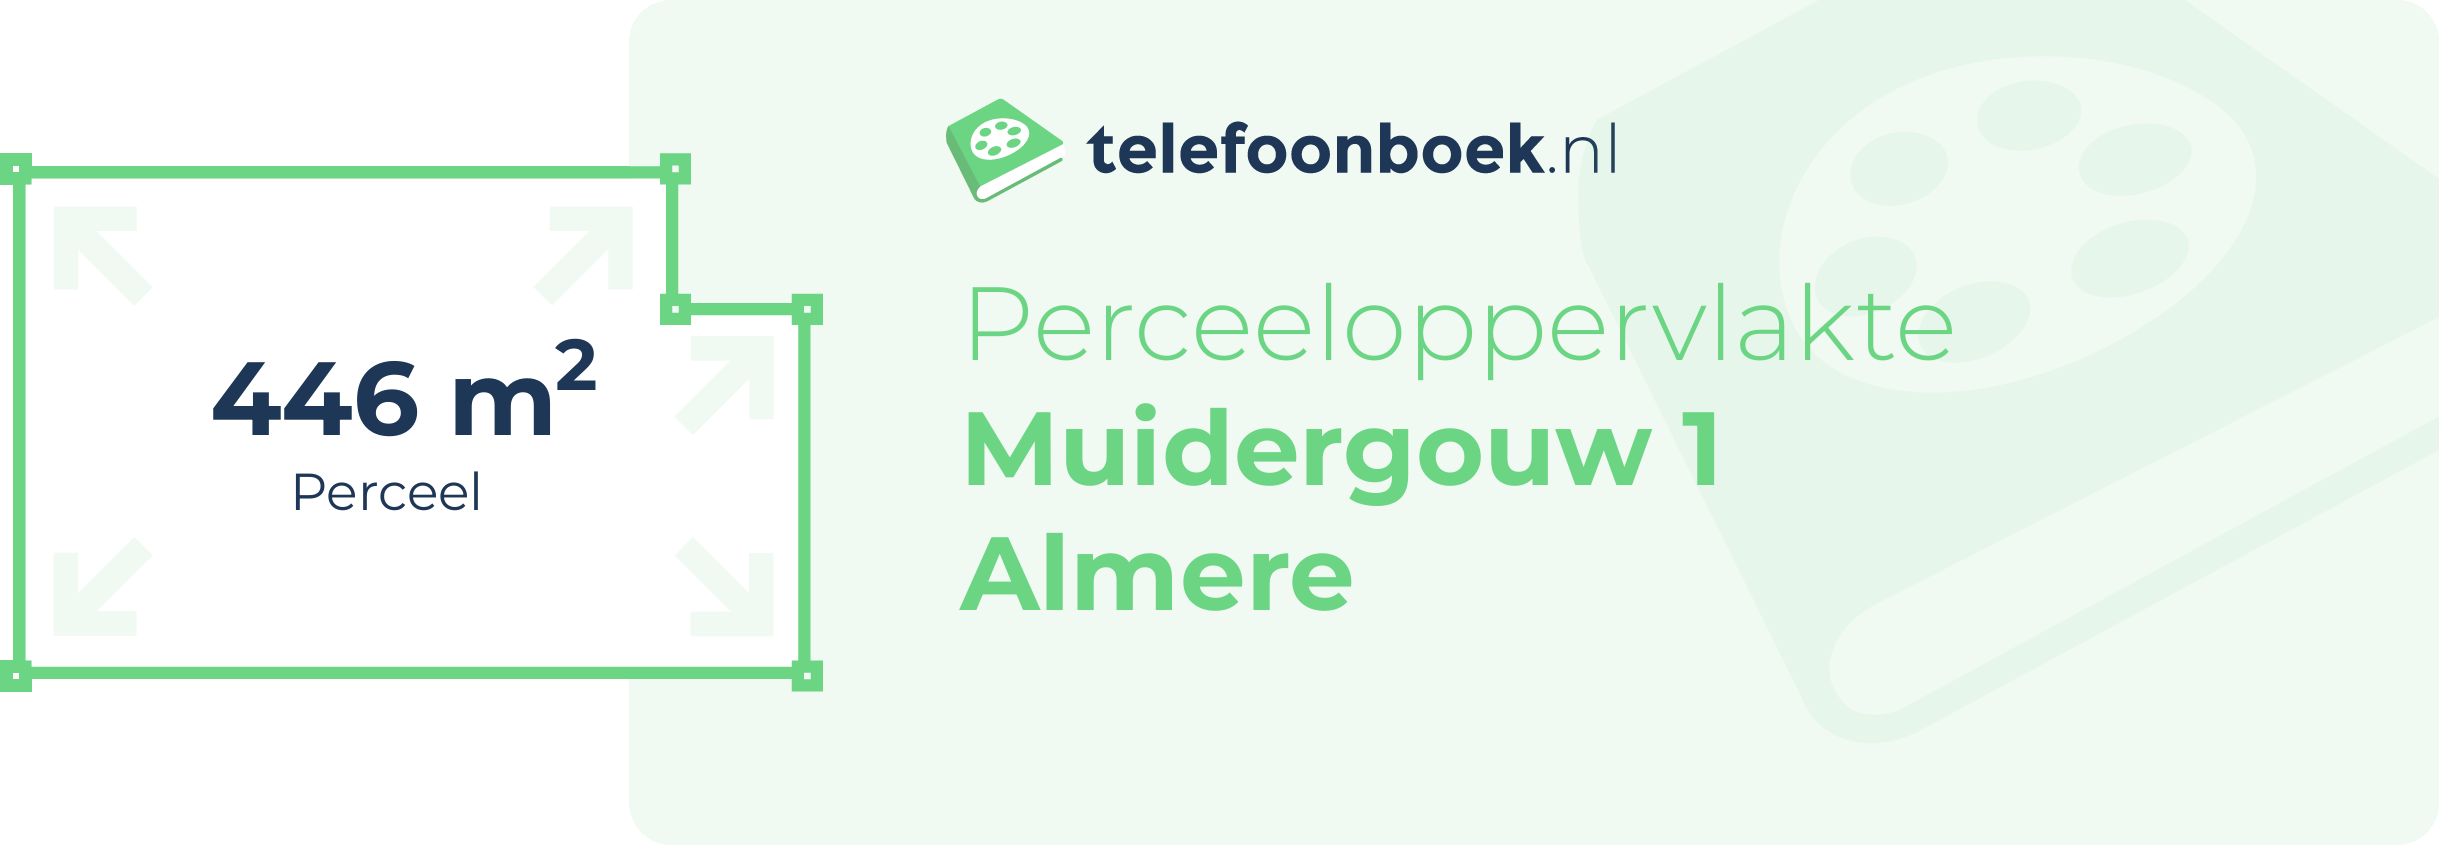 Perceeloppervlakte Muidergouw 1 Almere